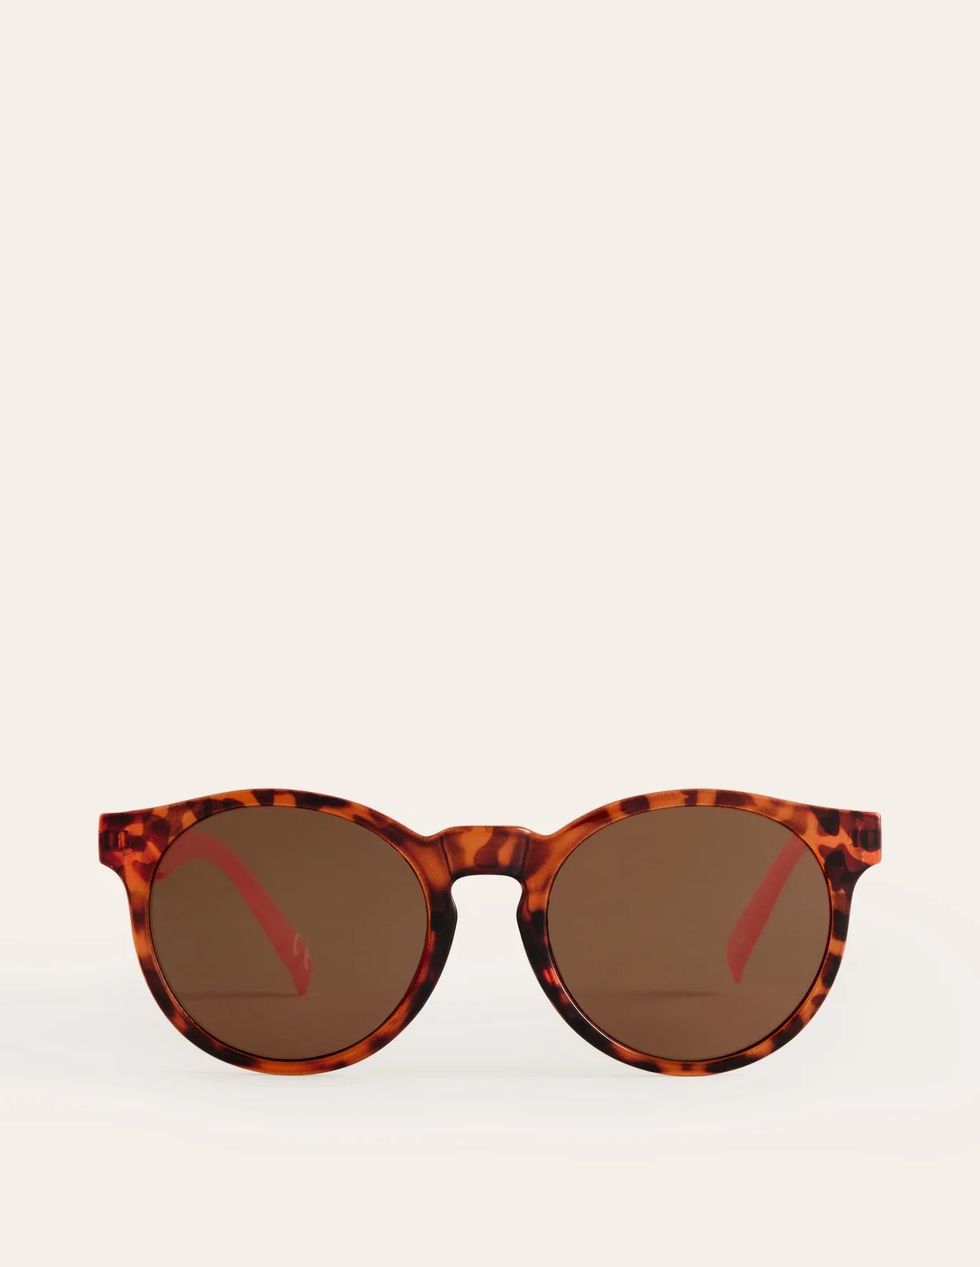 Tort Brown Sunglasses